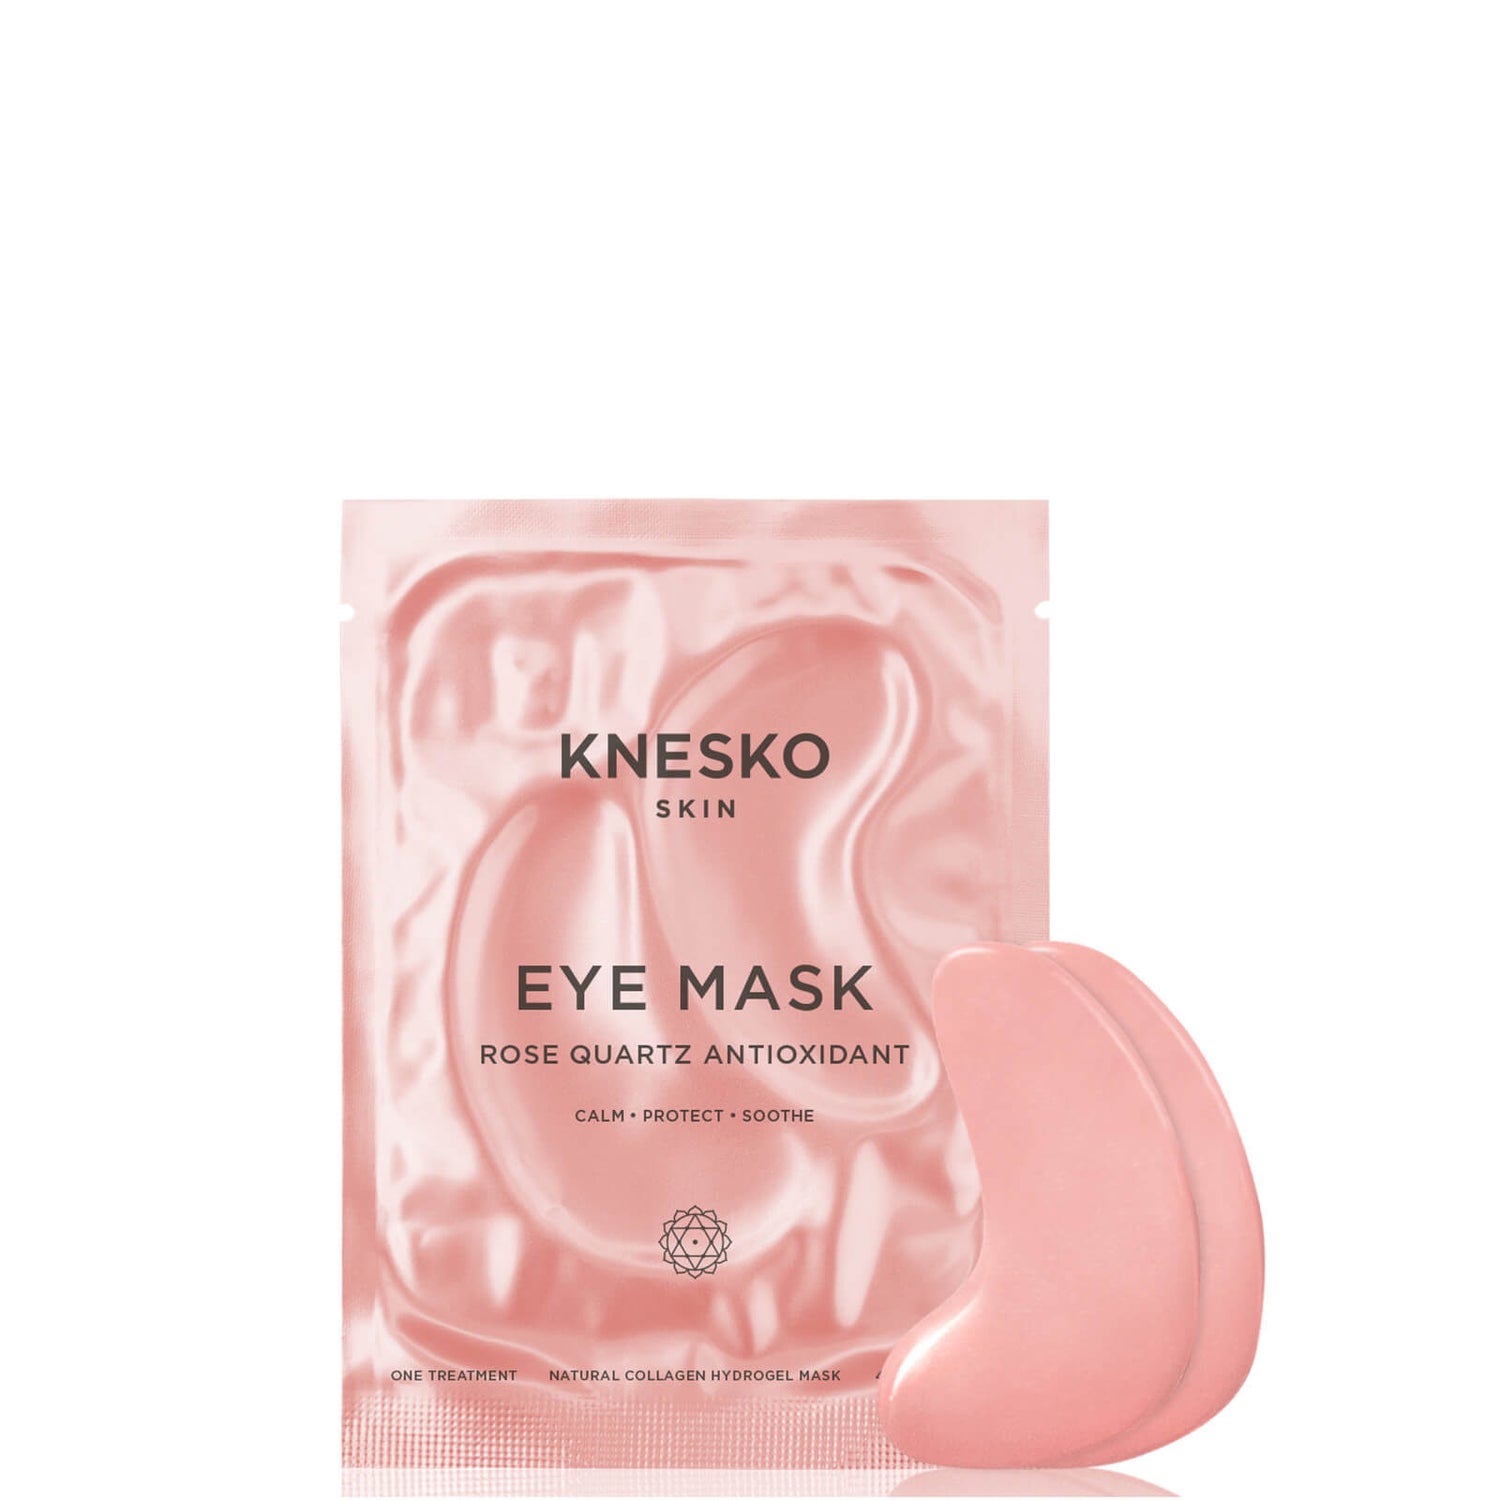 Knesko Skin Rose Quartz Antioxidant Eye Mask 6 Treatments 25ml (Worth £90.00)